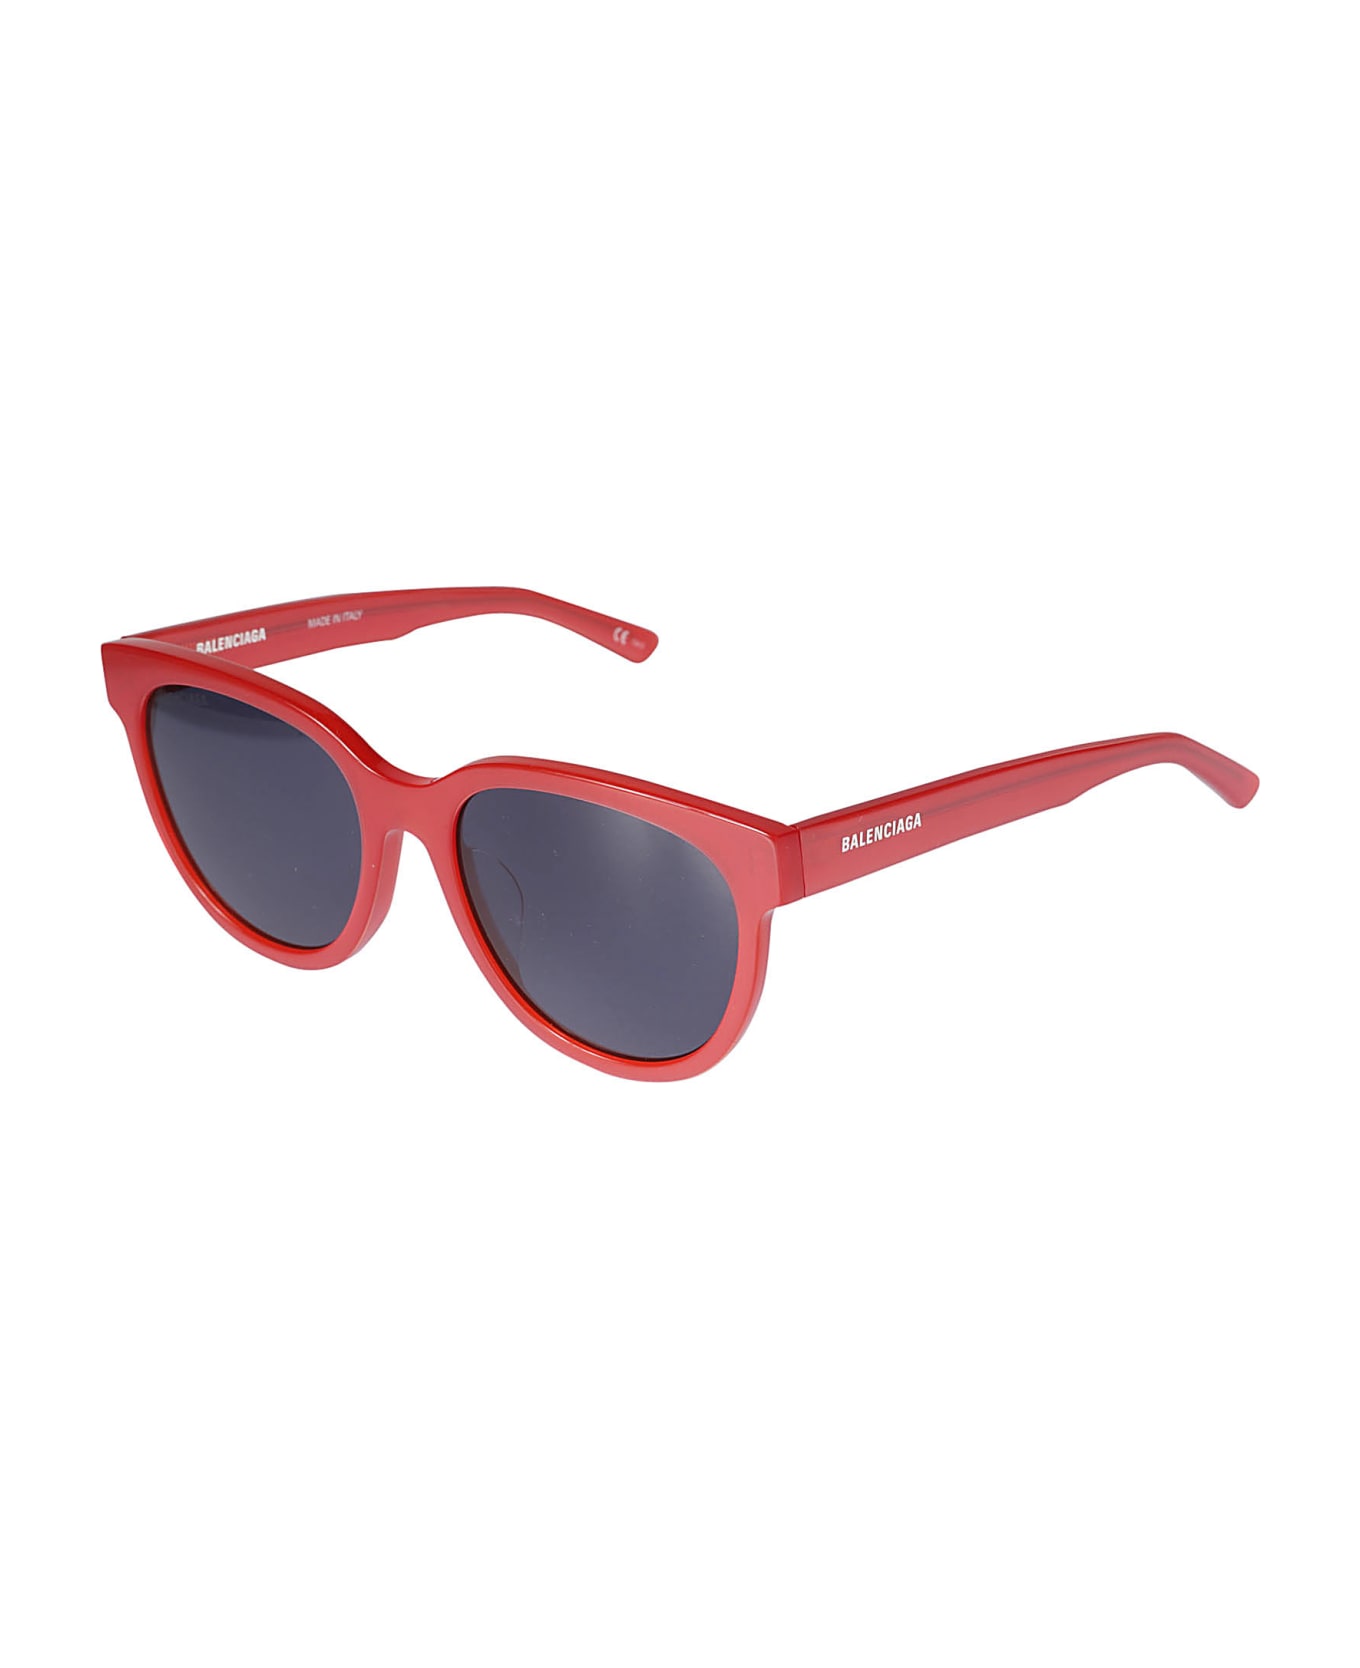 Balenciaga Eyewear Everyday Sunglasses - 003 red red blue サングラス